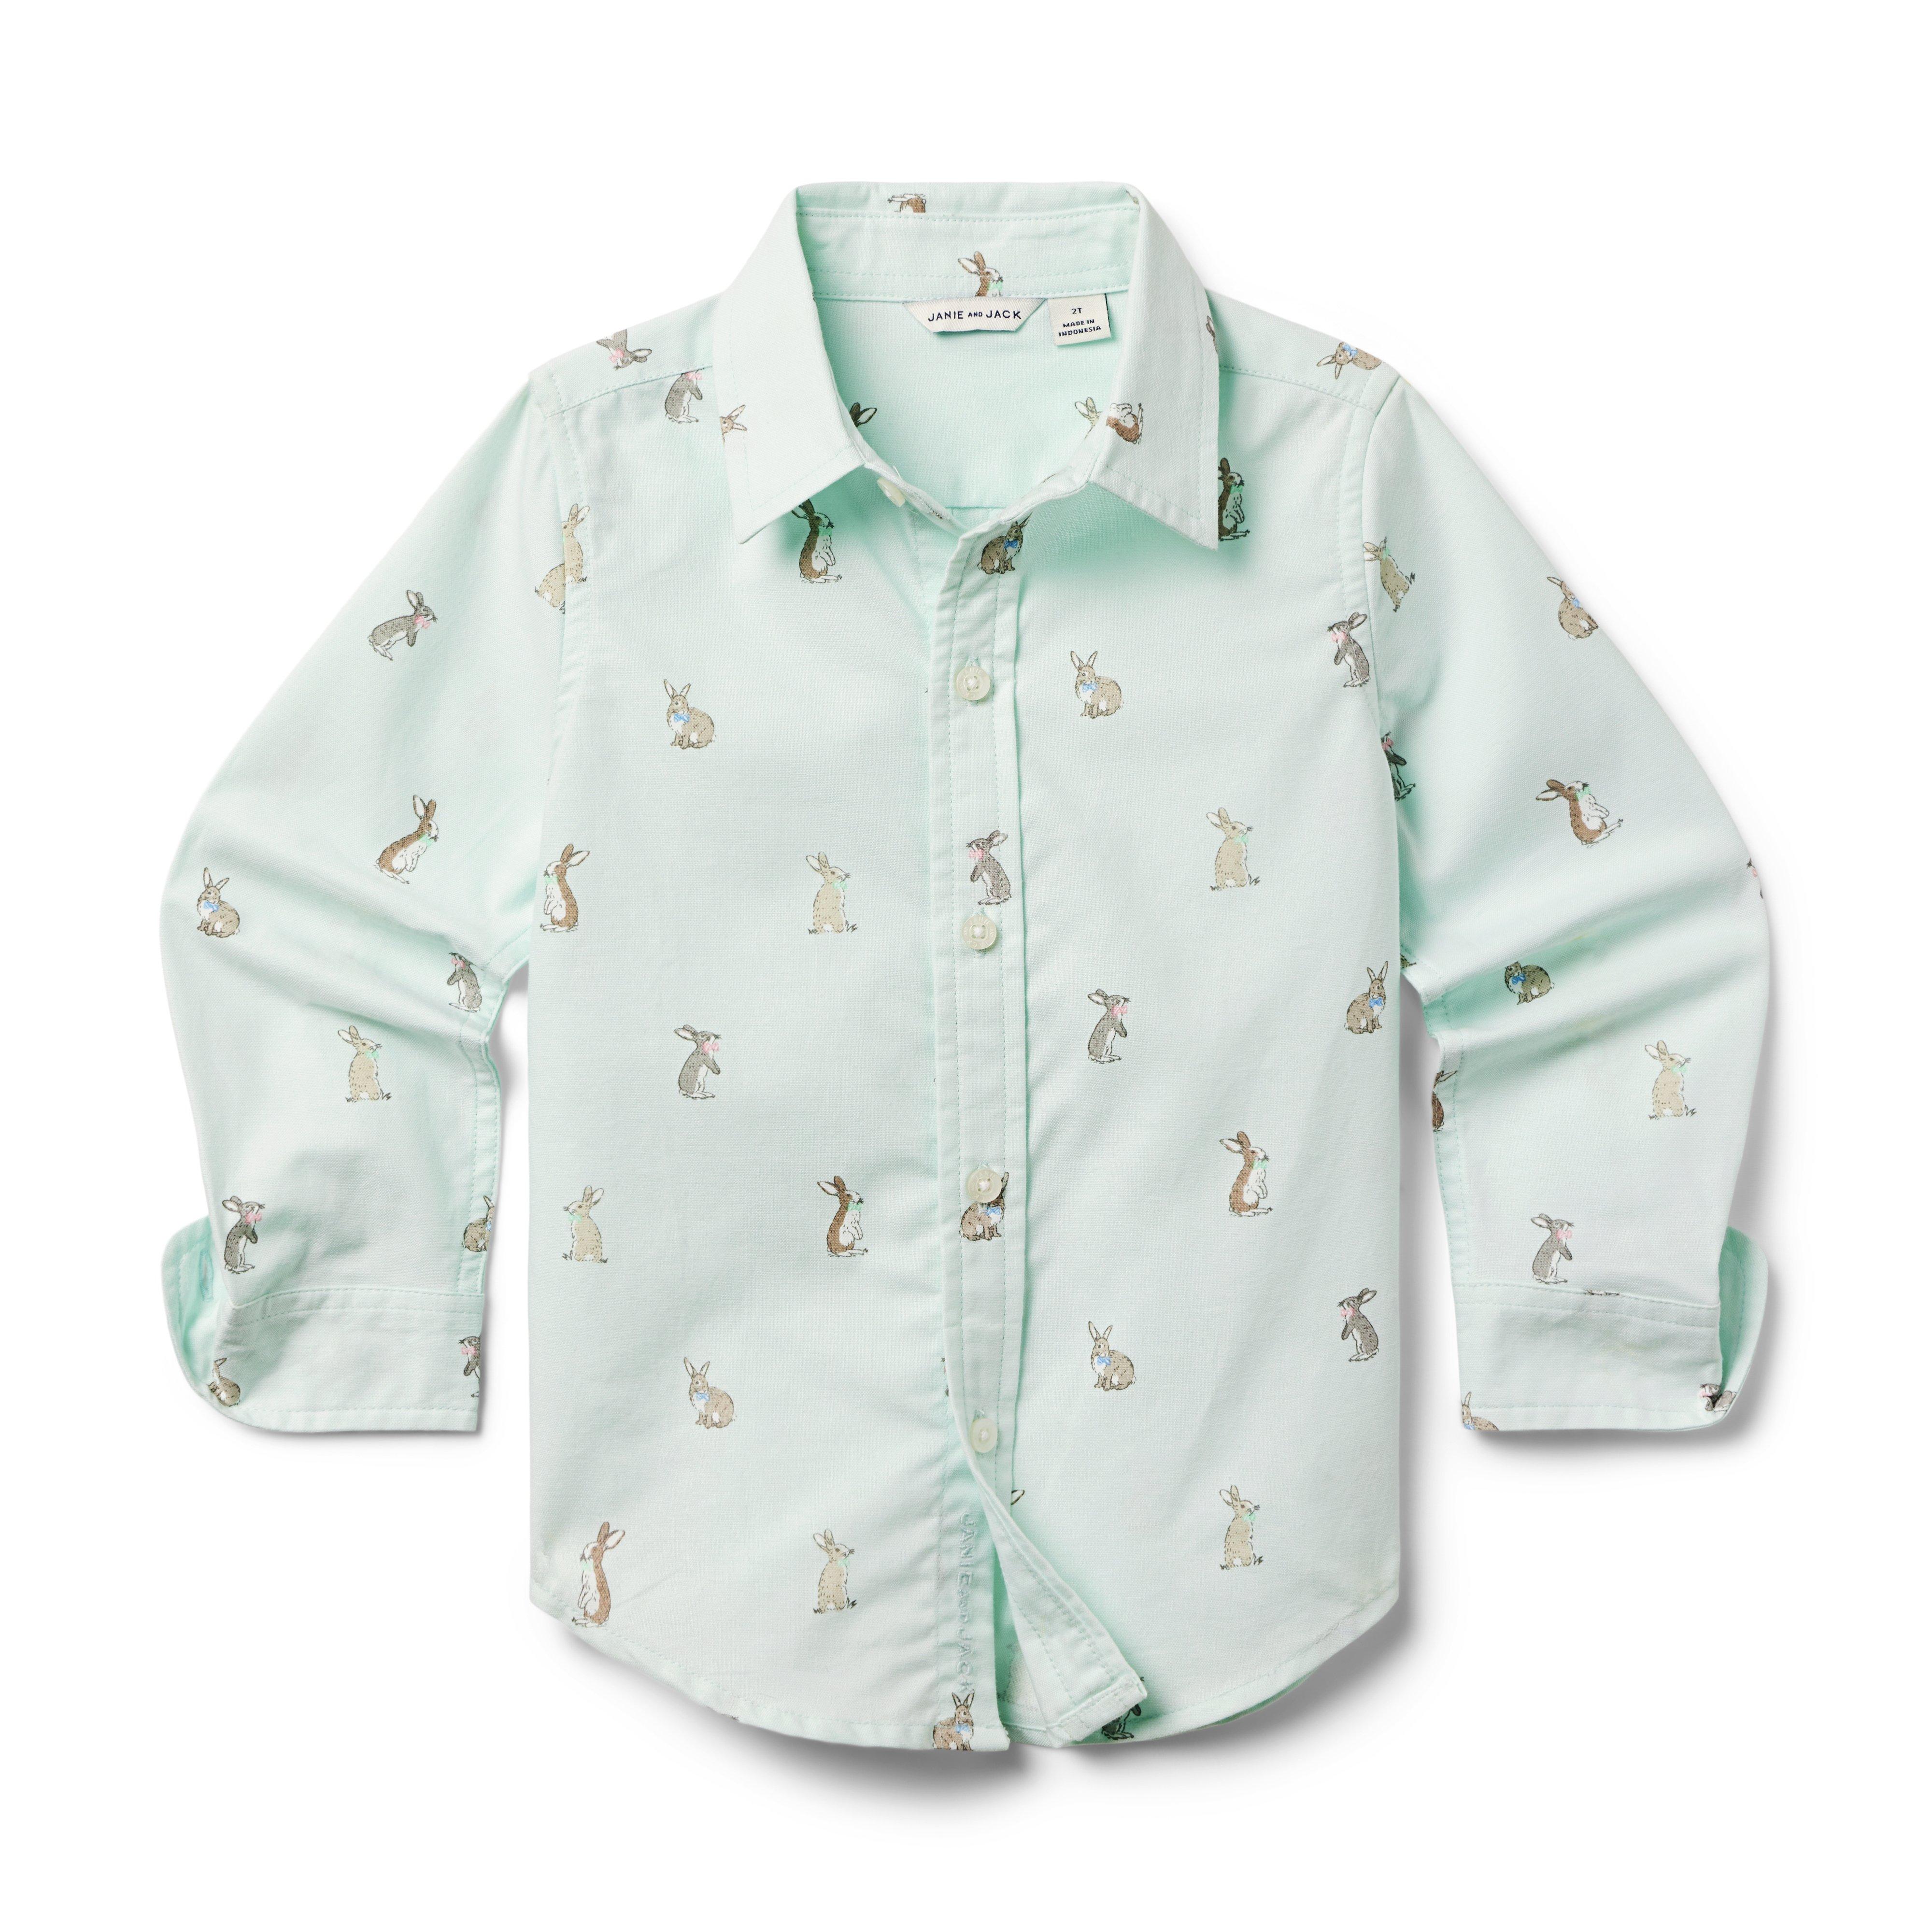 Bunny Oxford Shirt